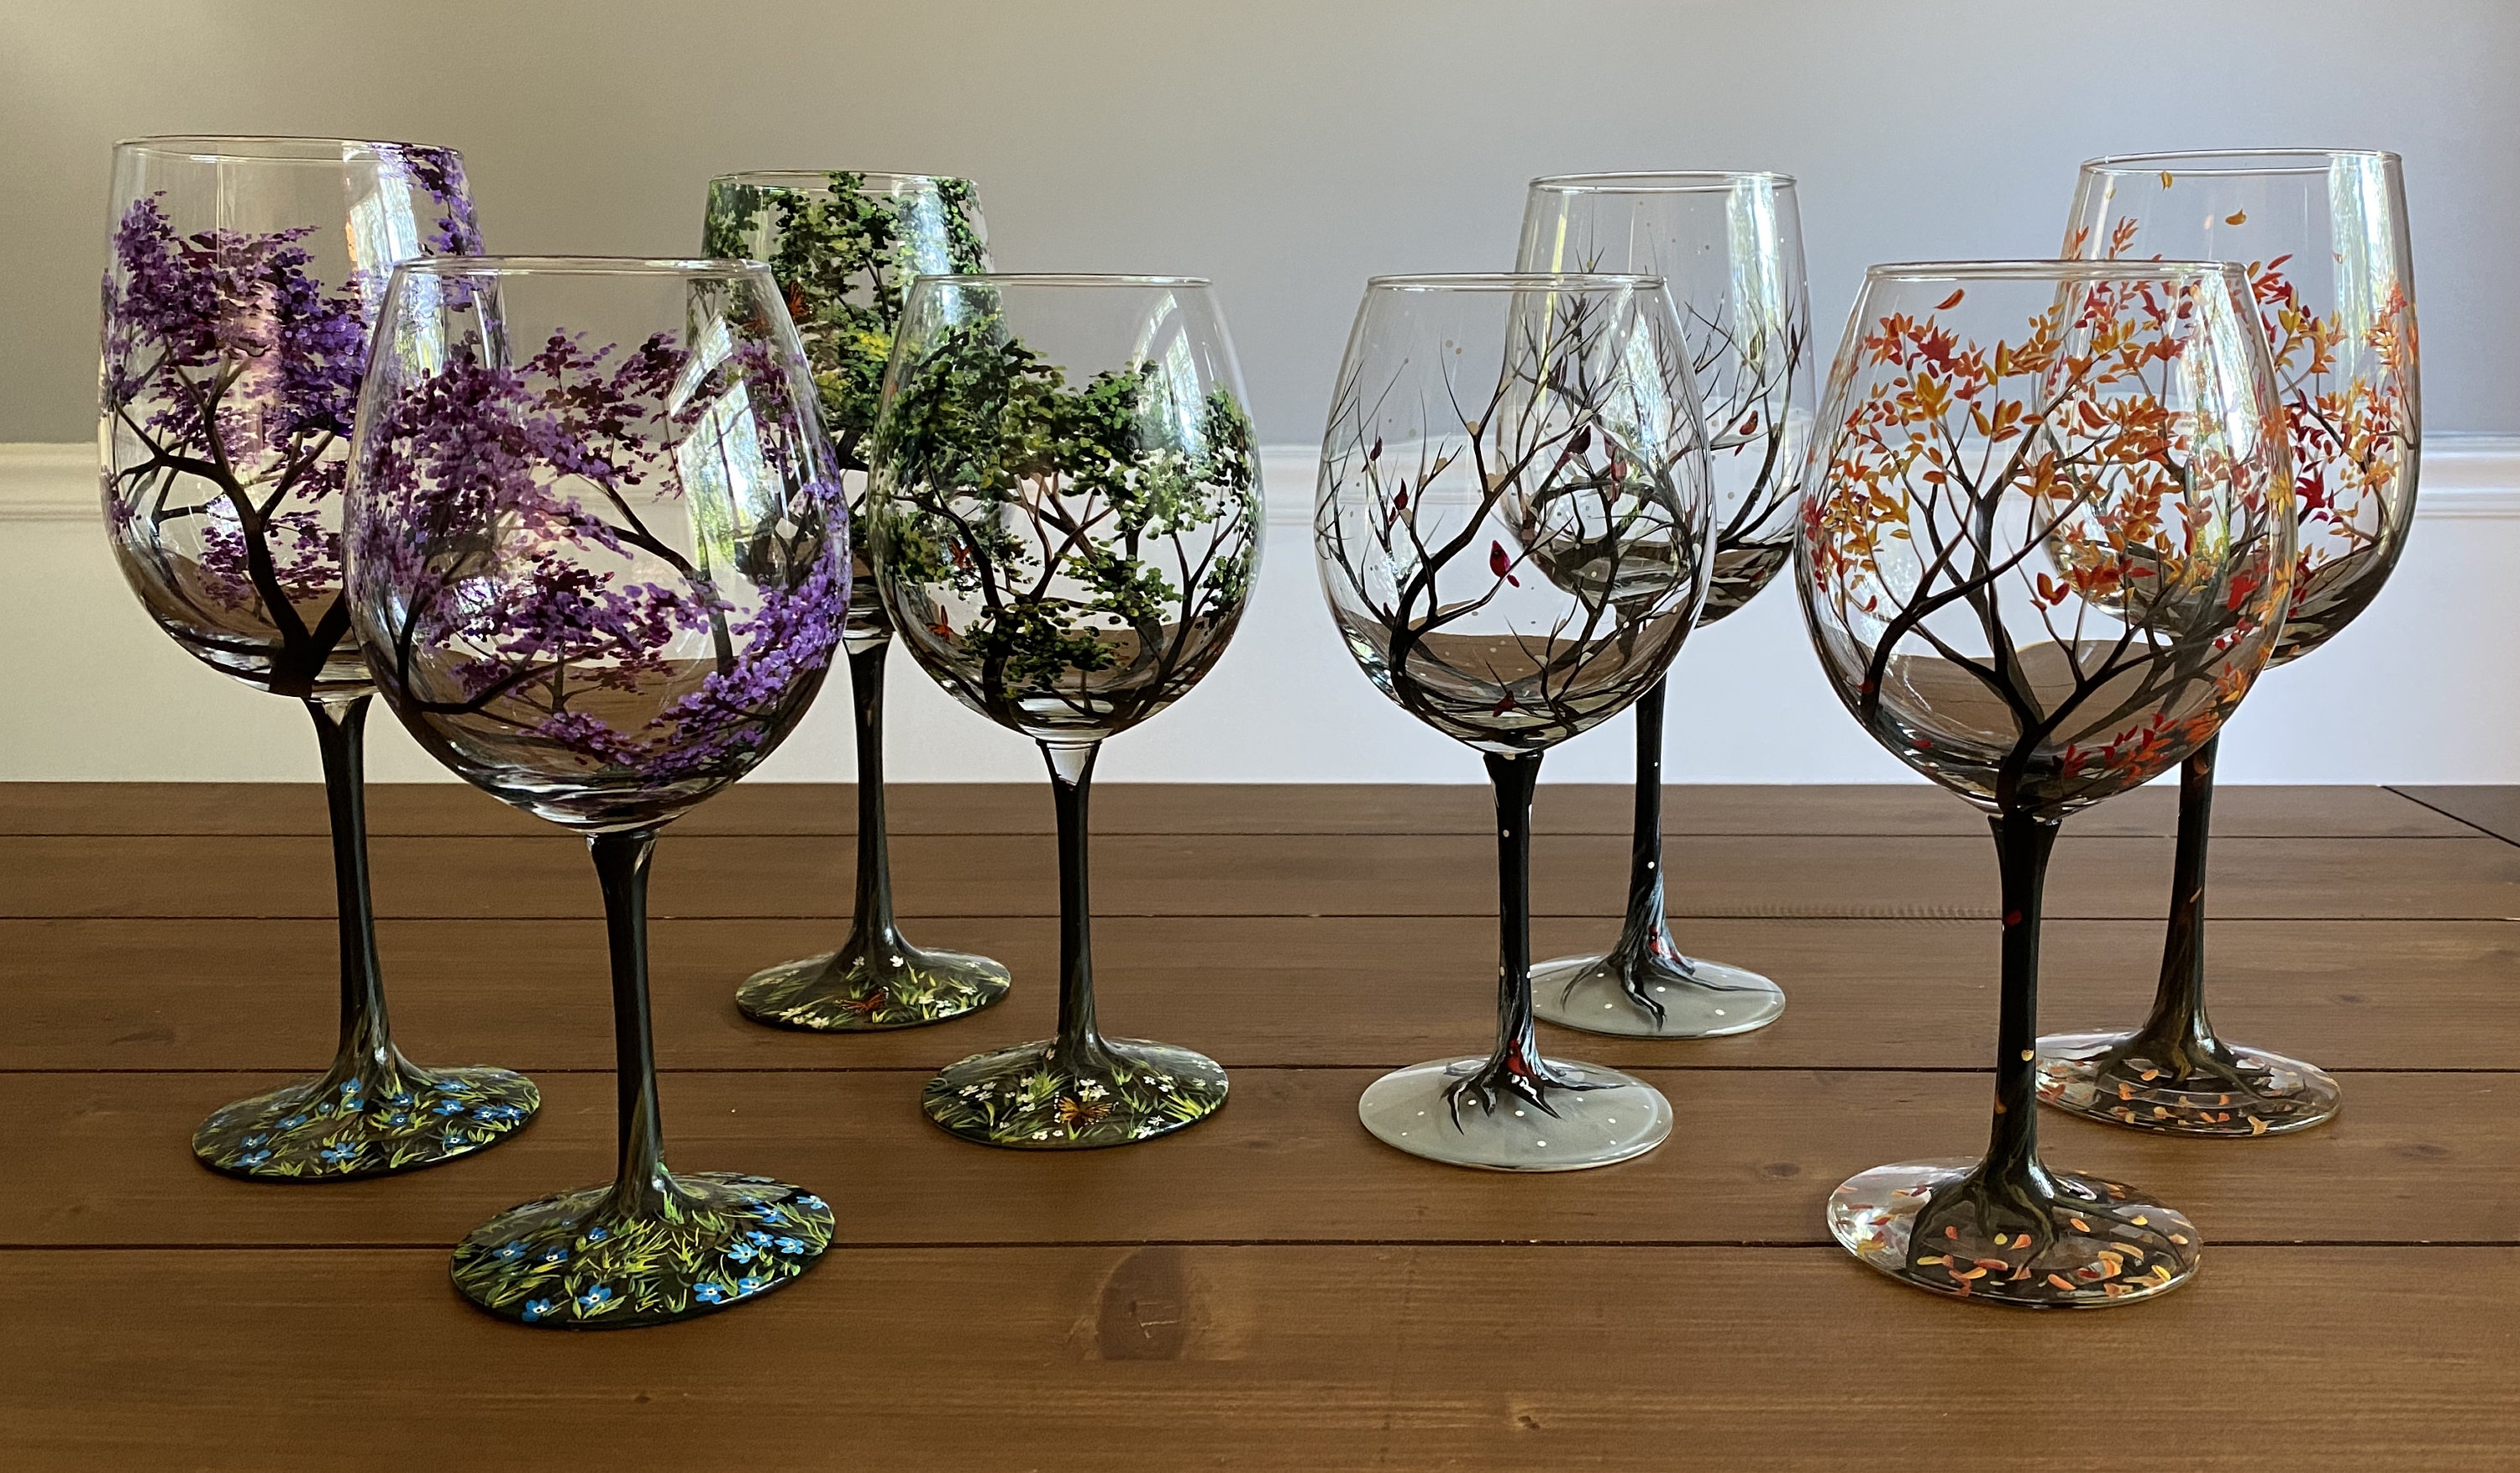 Hand Painted Wine Wednesday Wine Glasses - Gift Set of Three